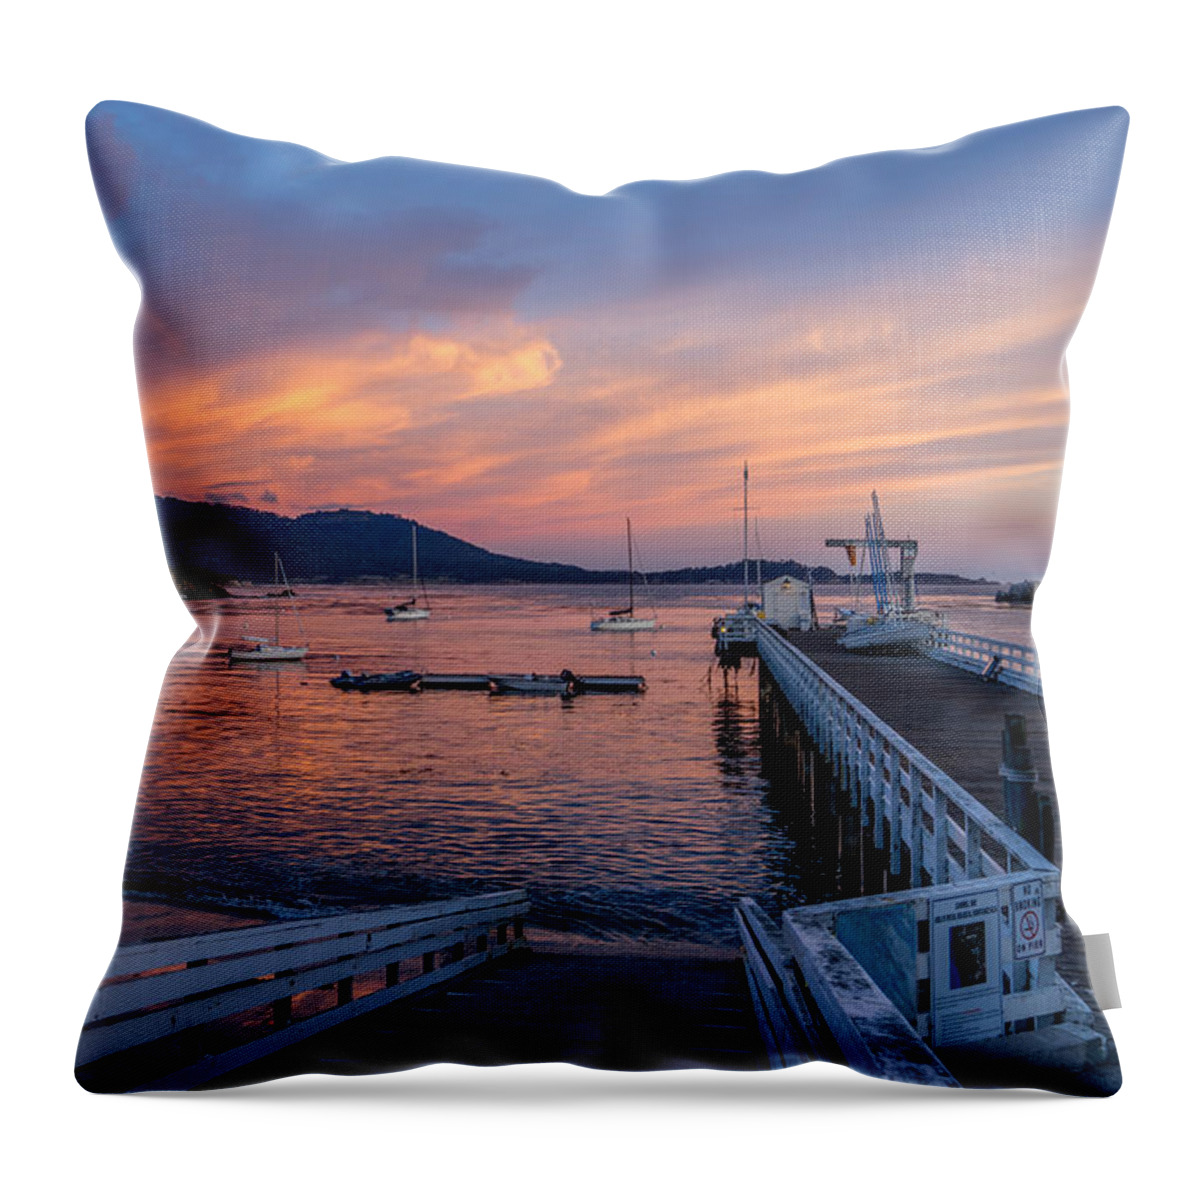 Sunrise Throw Pillow featuring the photograph Sunset At Stillwater Cove by Derek Dean